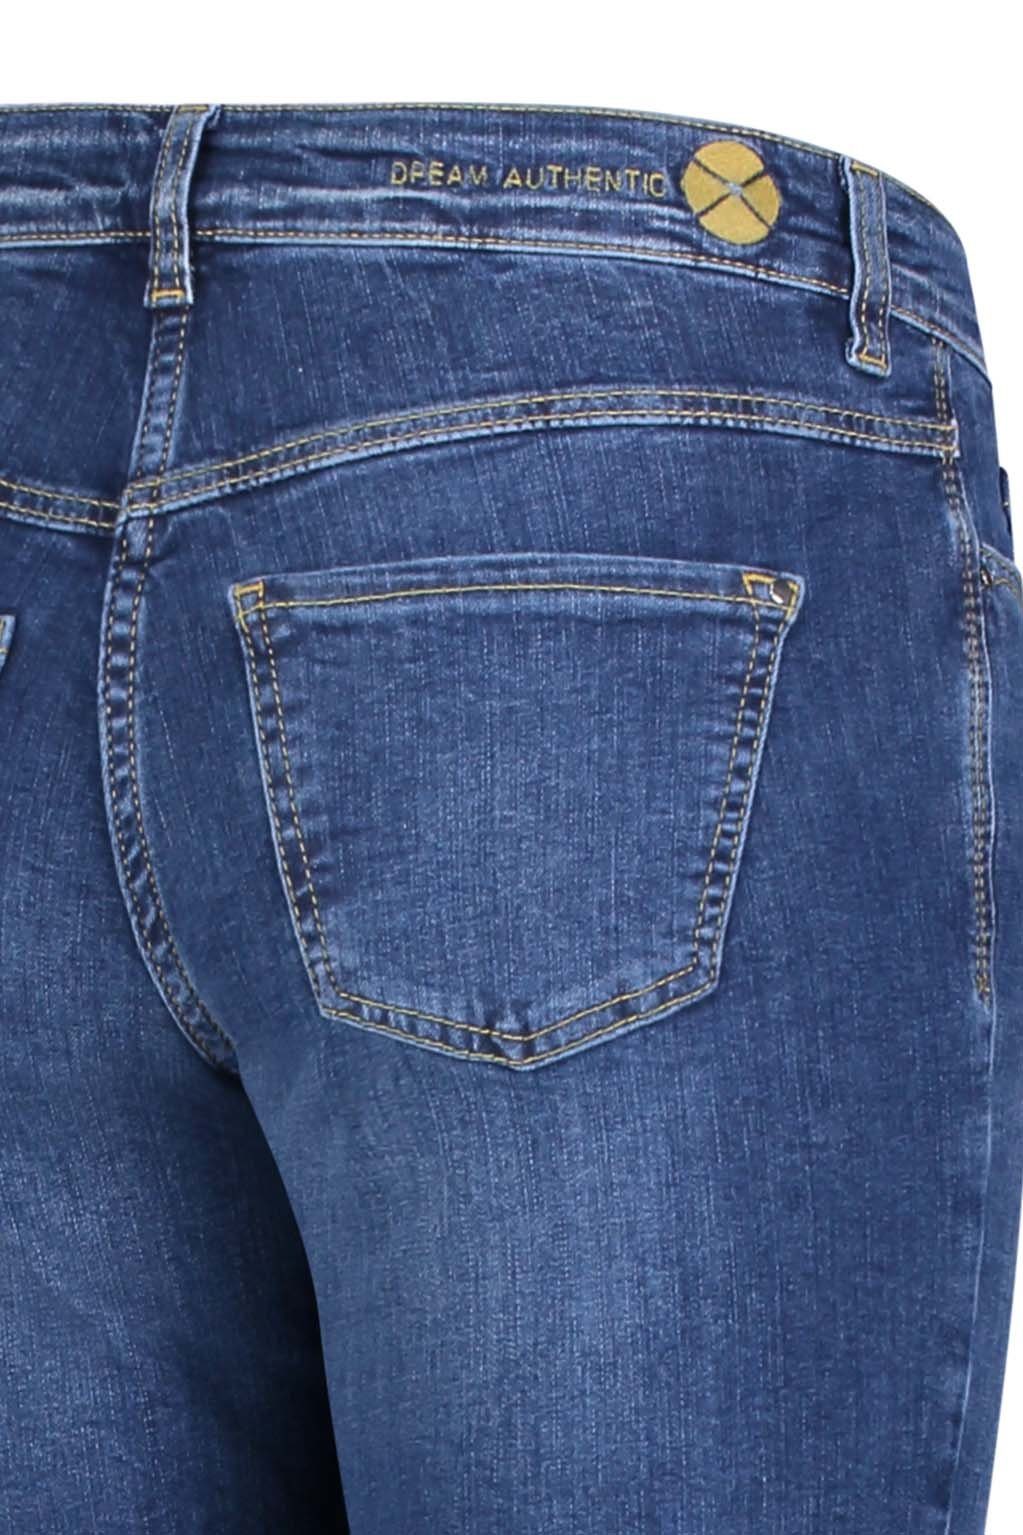 Damen Jeans MAC Stretch-Jeans MAC DREAM BOOT mid blue authentic wash 5429-90-035